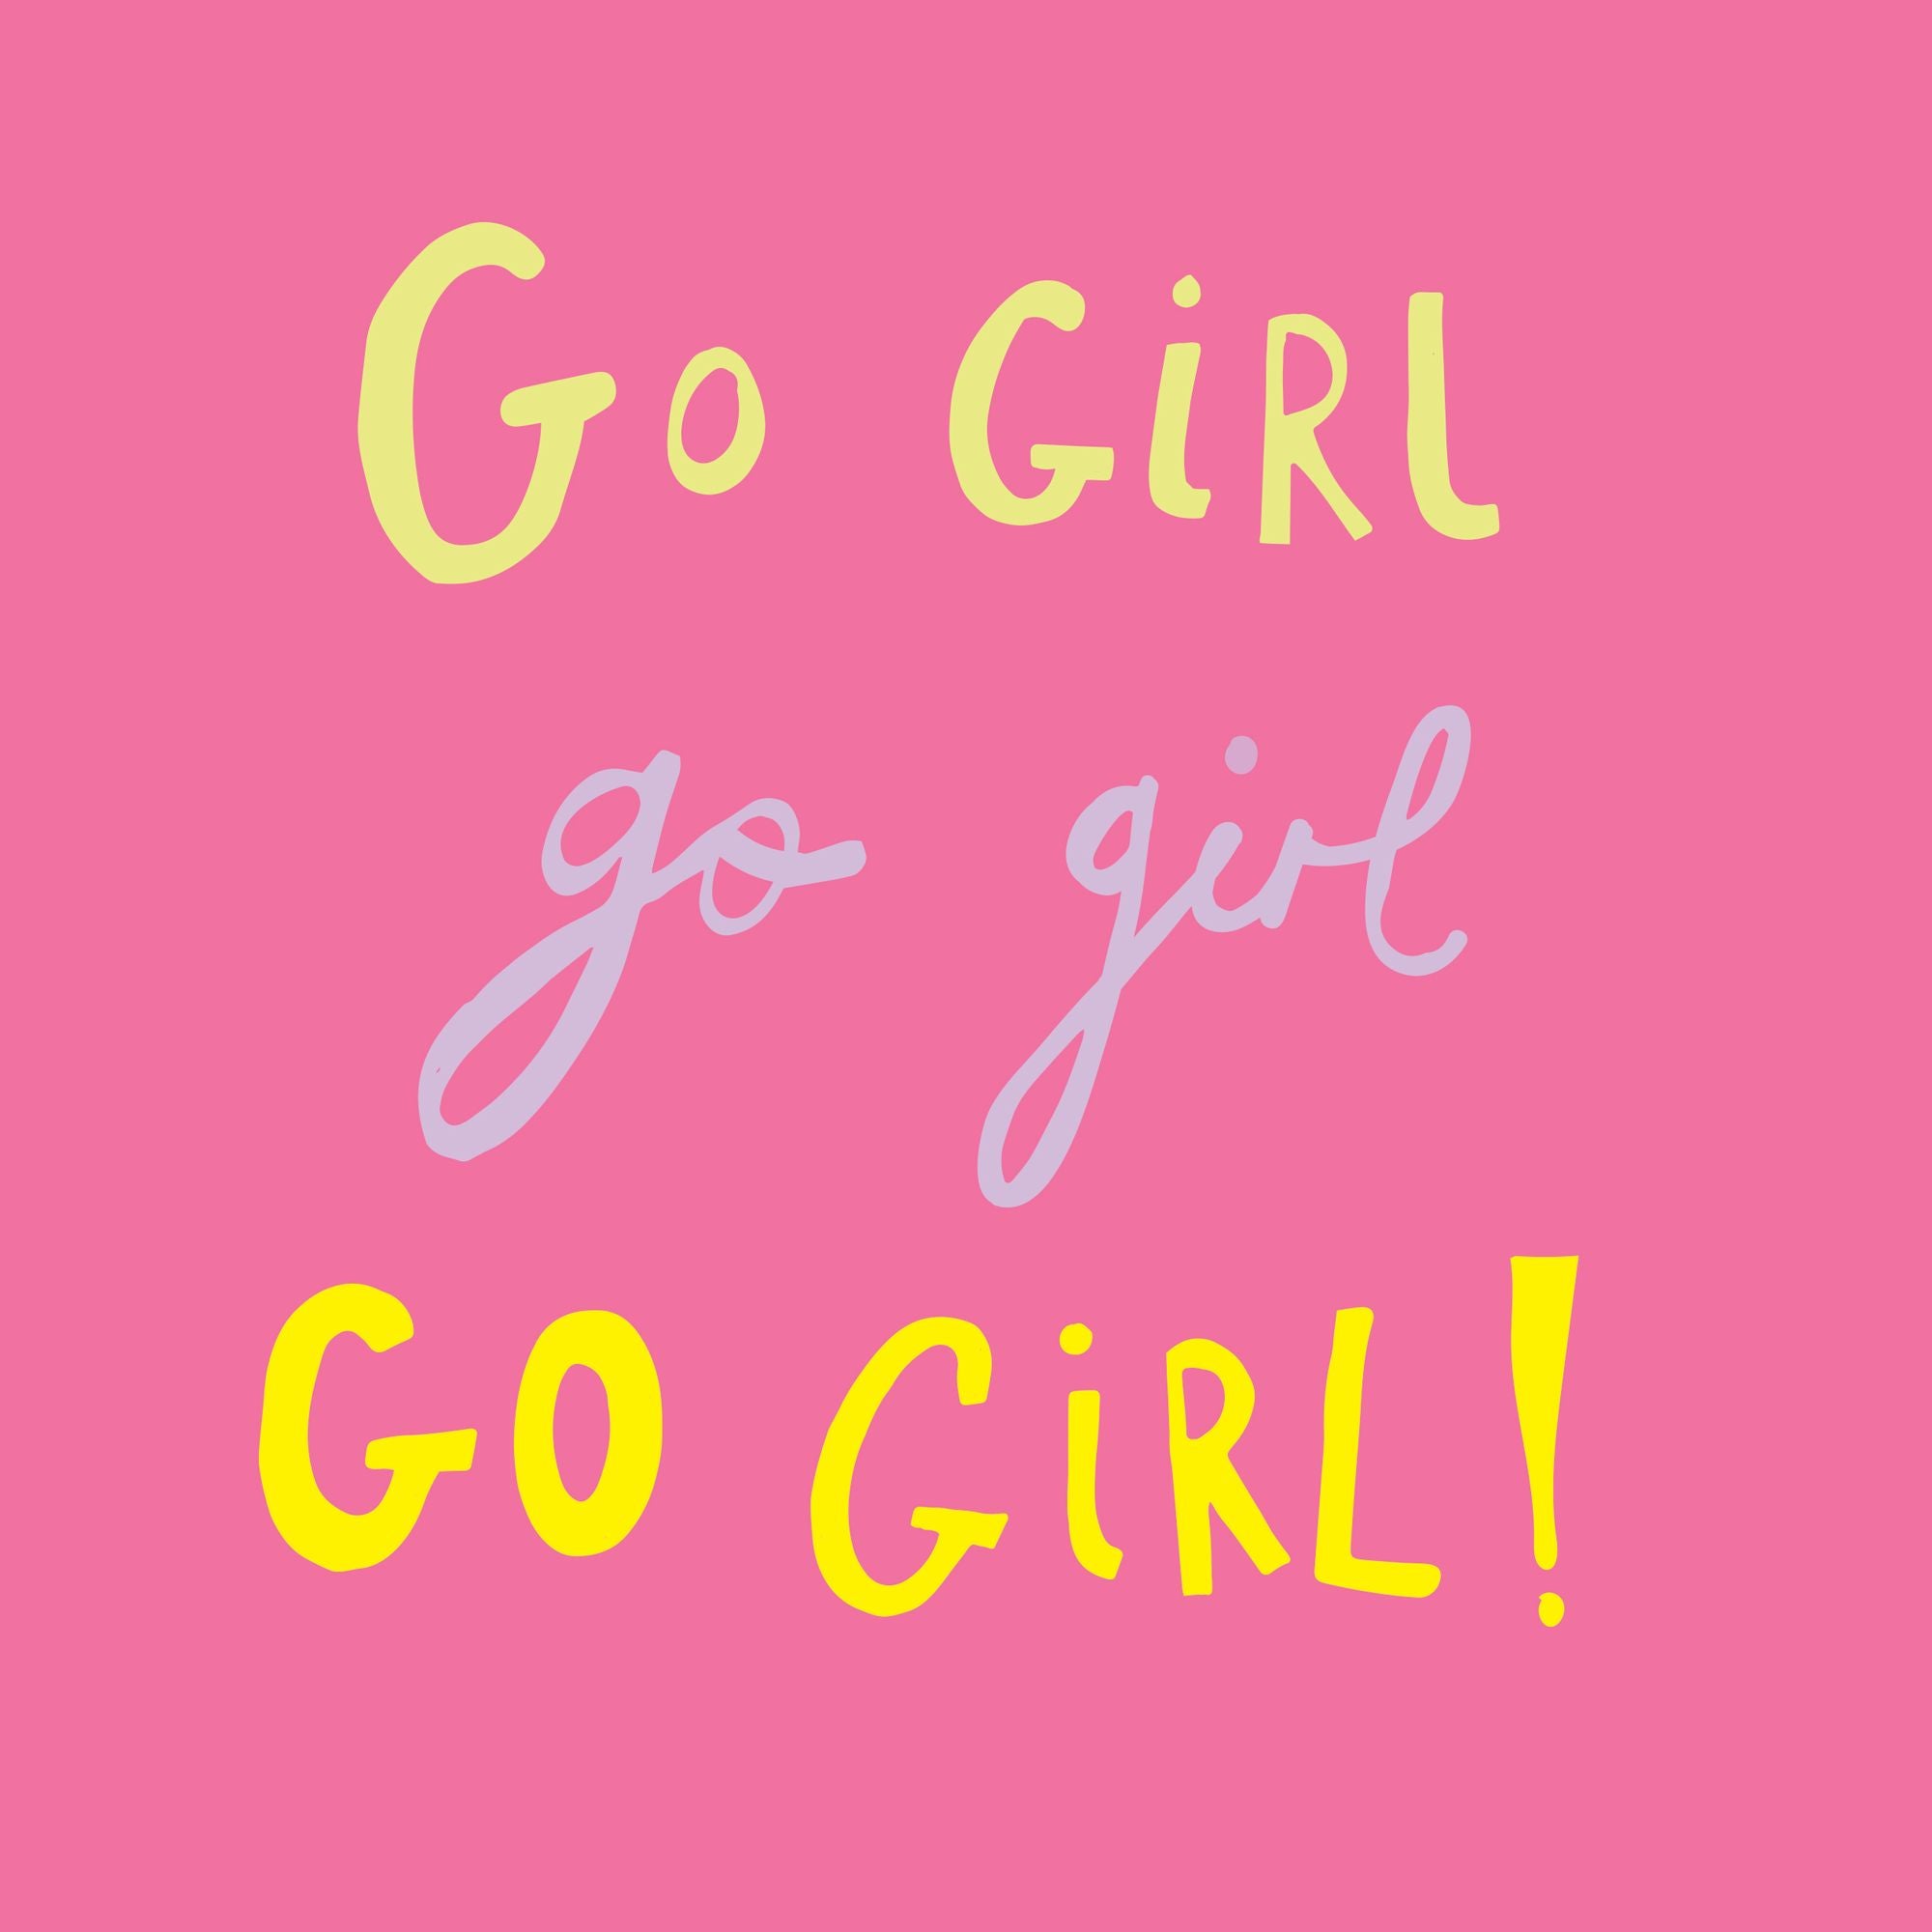 Go girl, go girl, go girl! Card